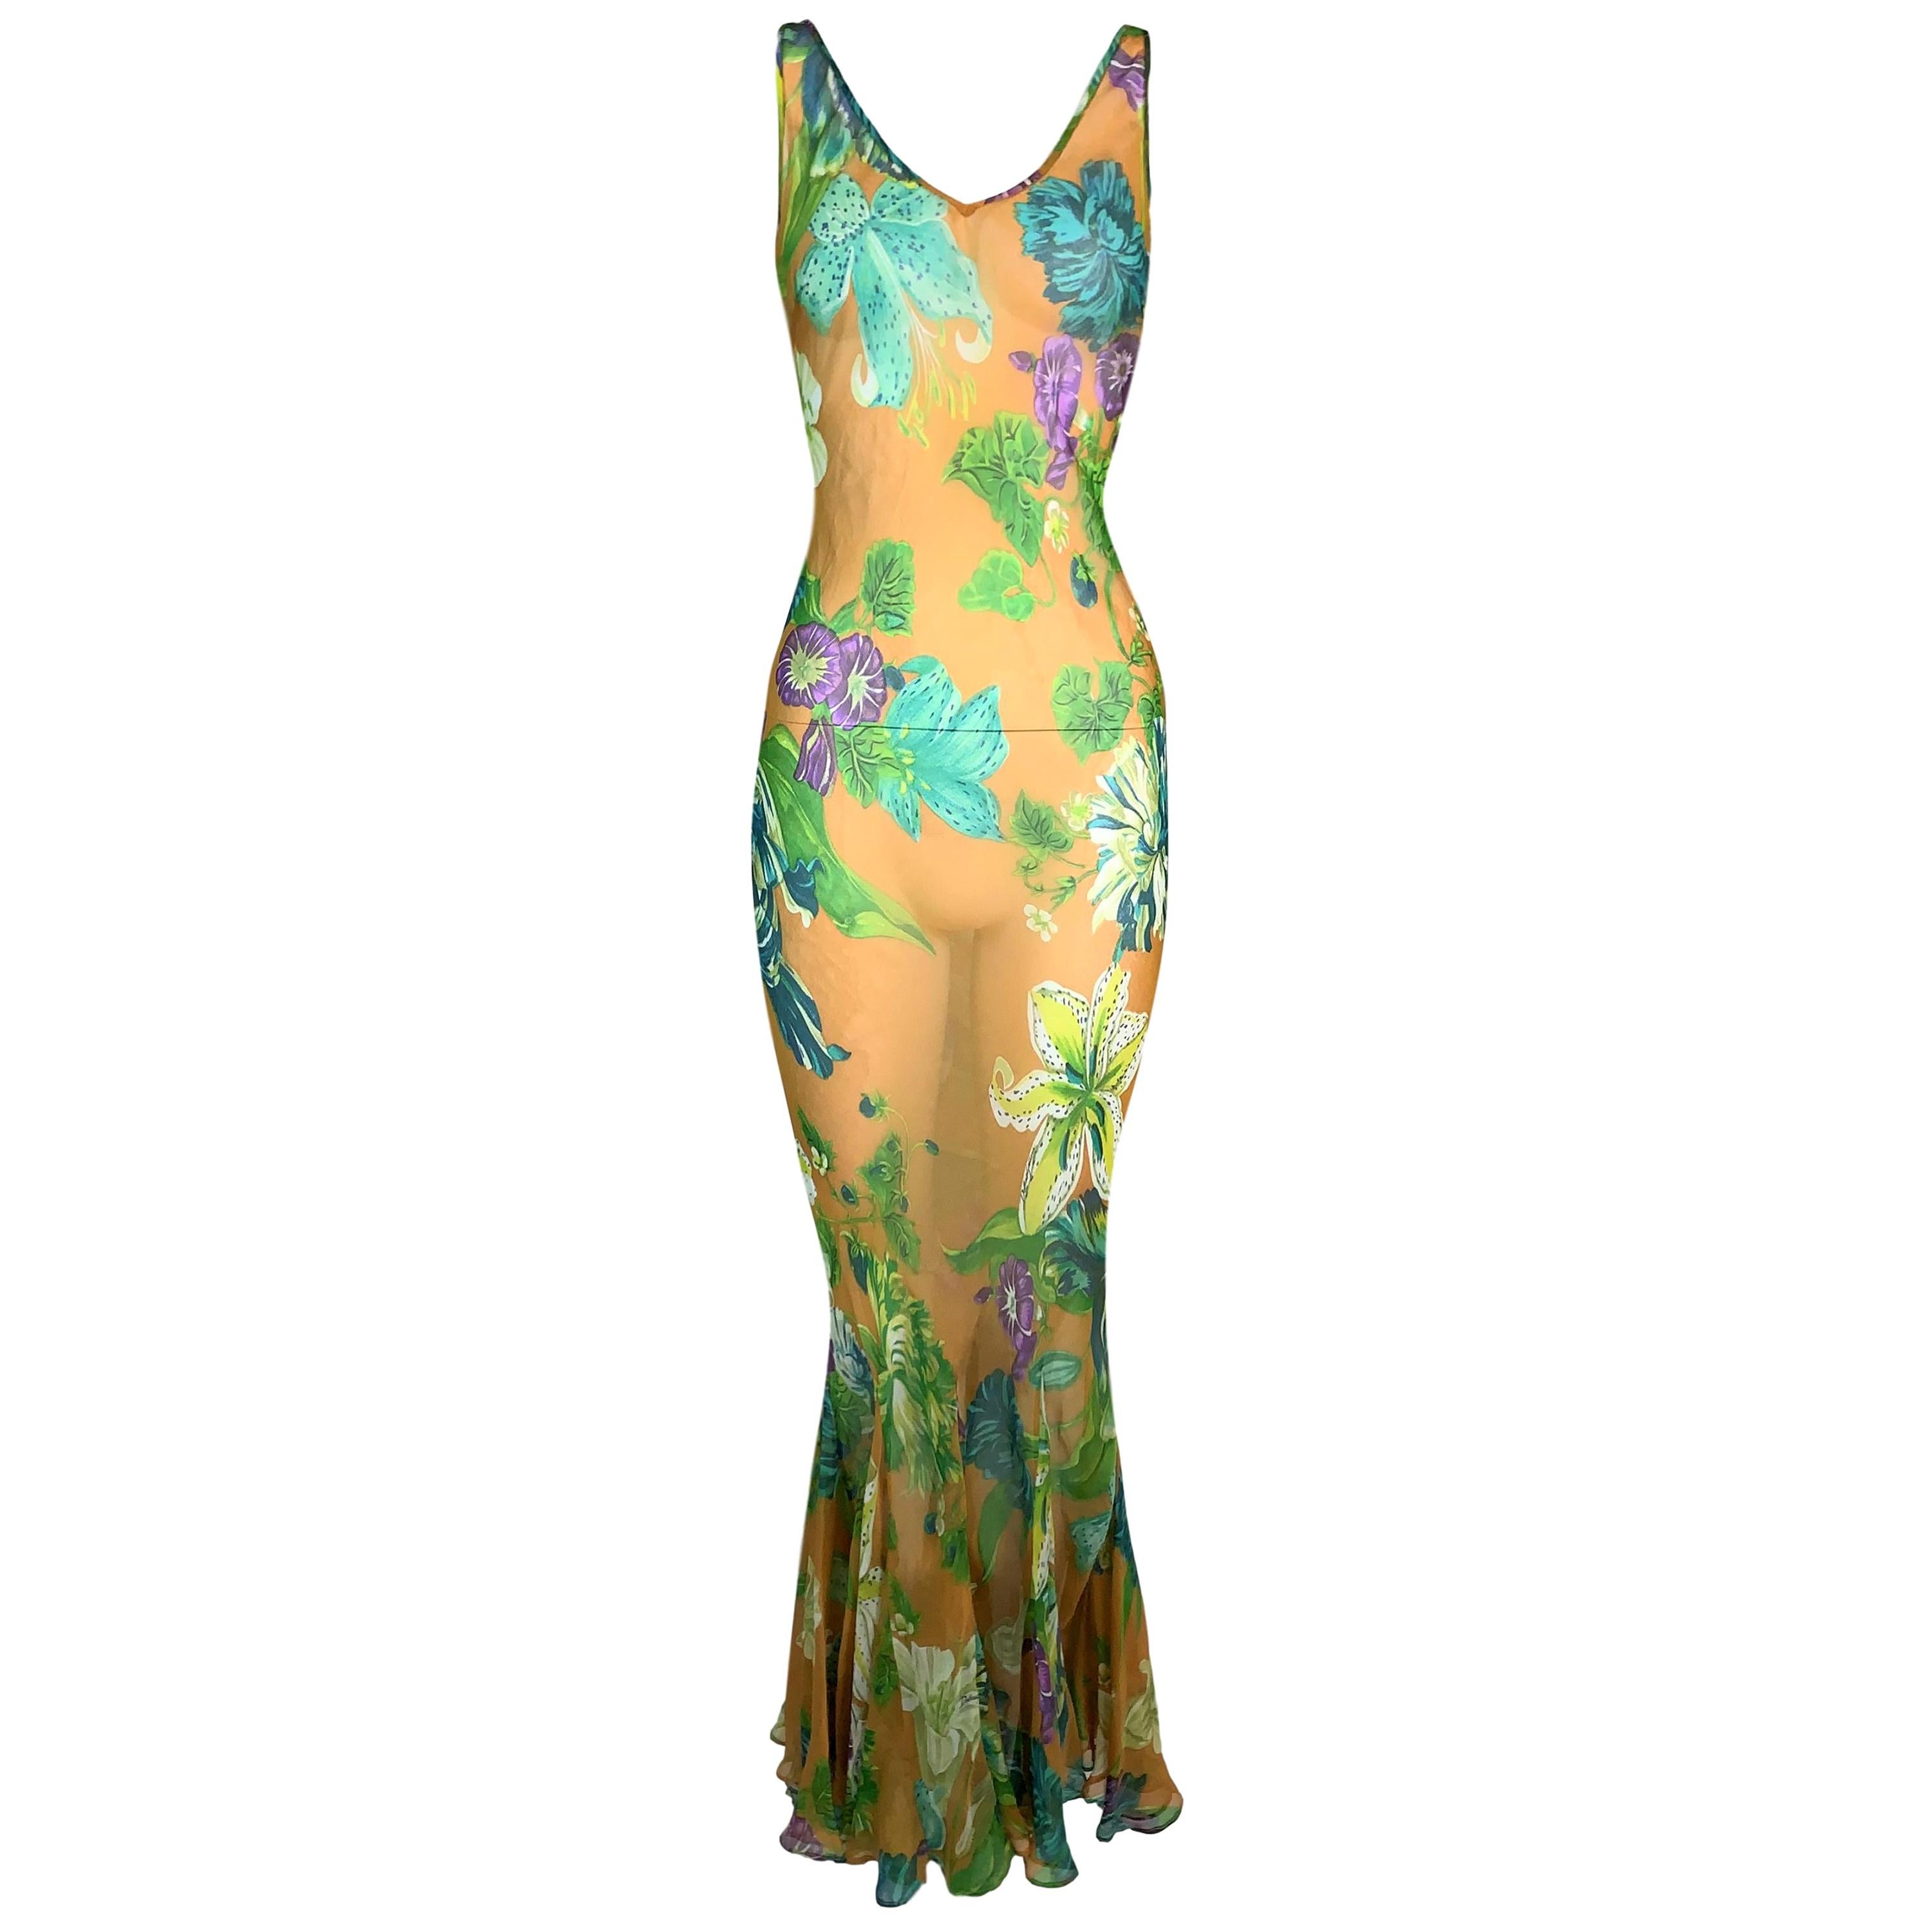 S/S 2000 Dolce & Gabbana Sheer Yellow Floral Silk Long Mermaid Dress